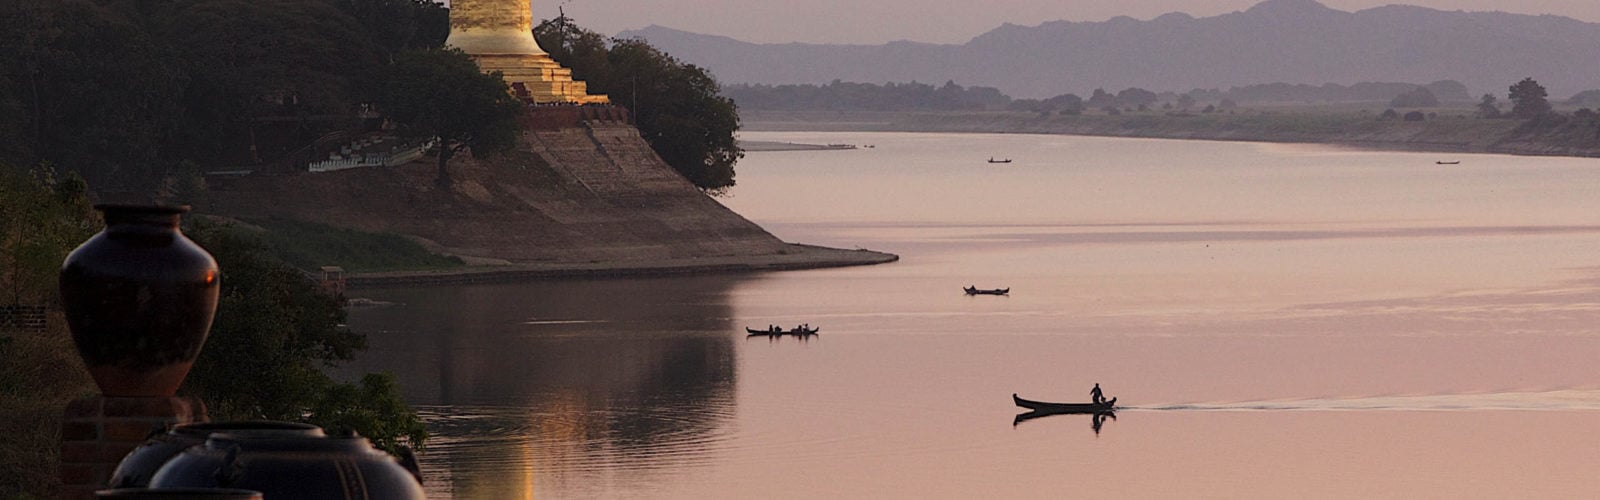 Buddhist temple, Irrawaddy River, Myanmar